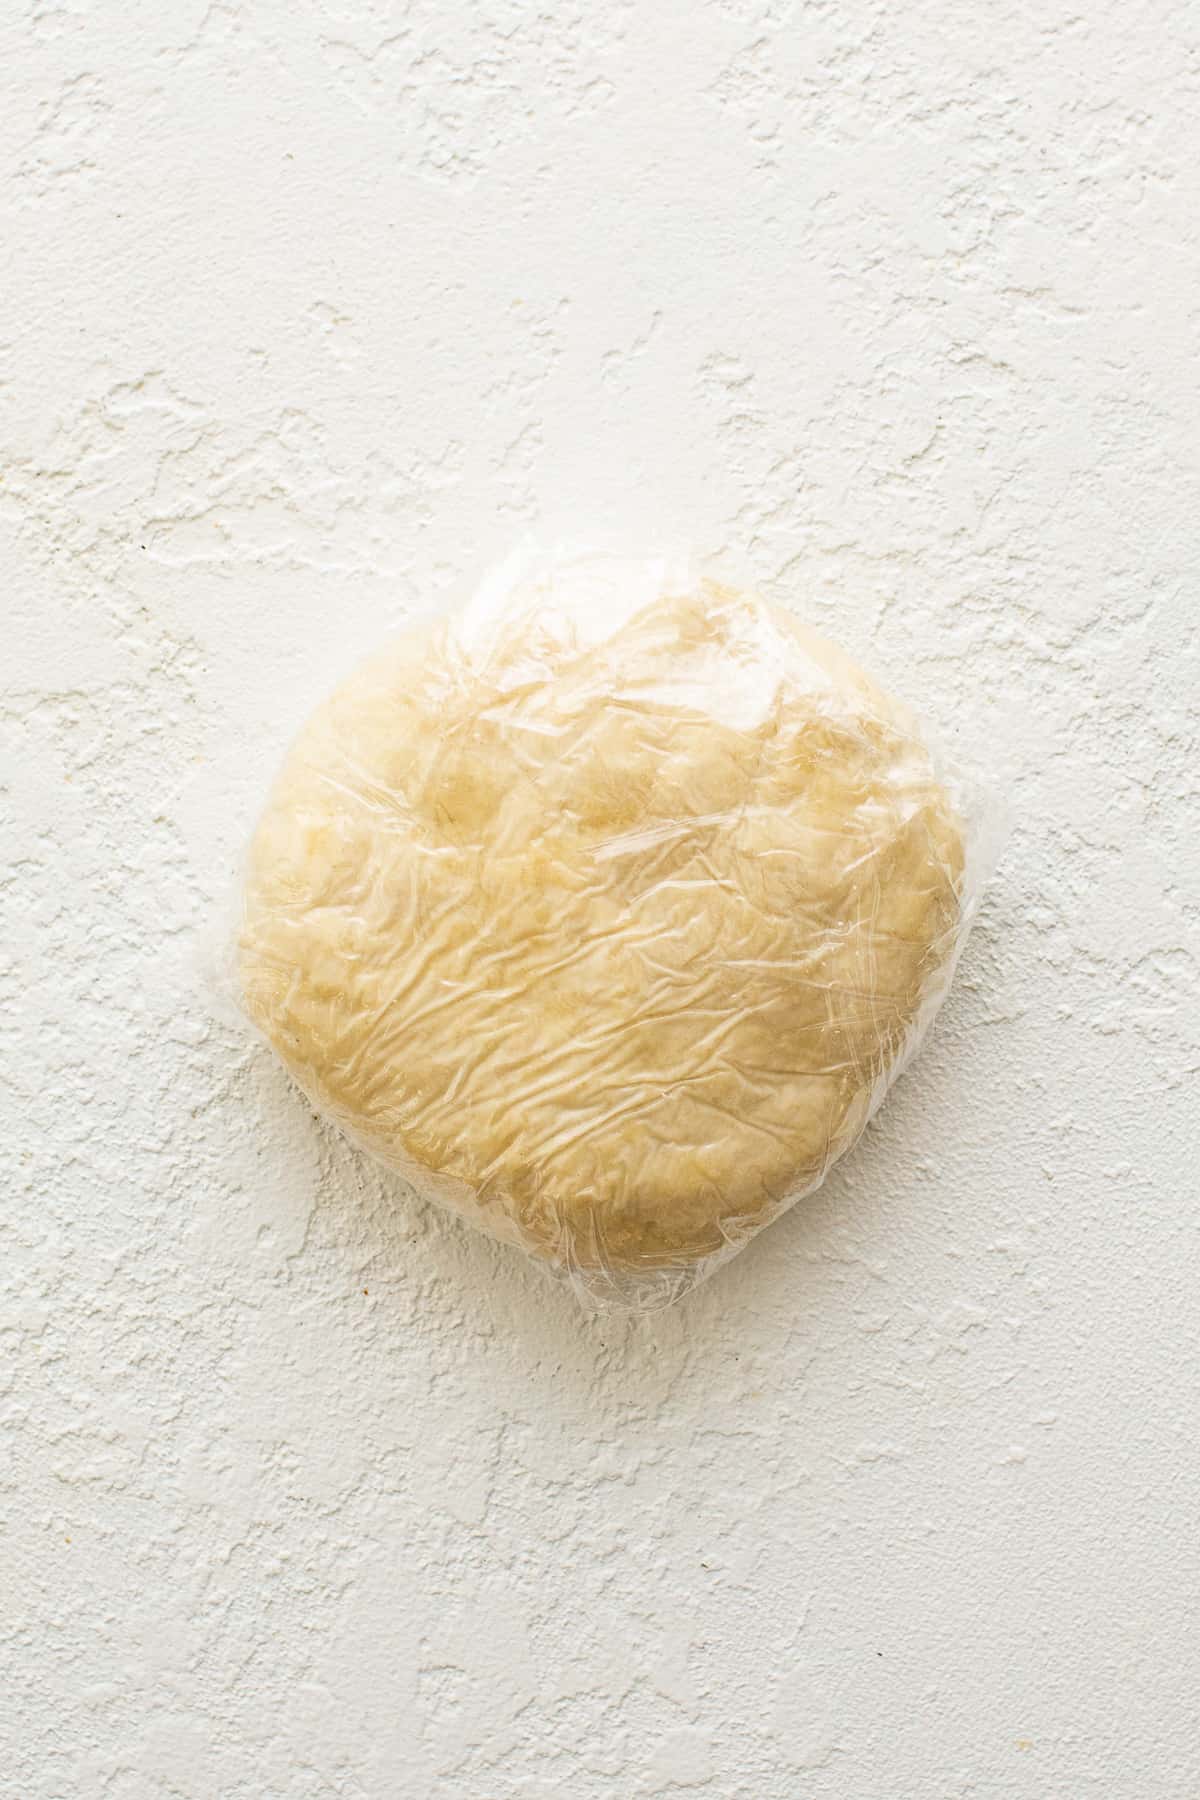 Empanada dough wrapped in plastic wrap.